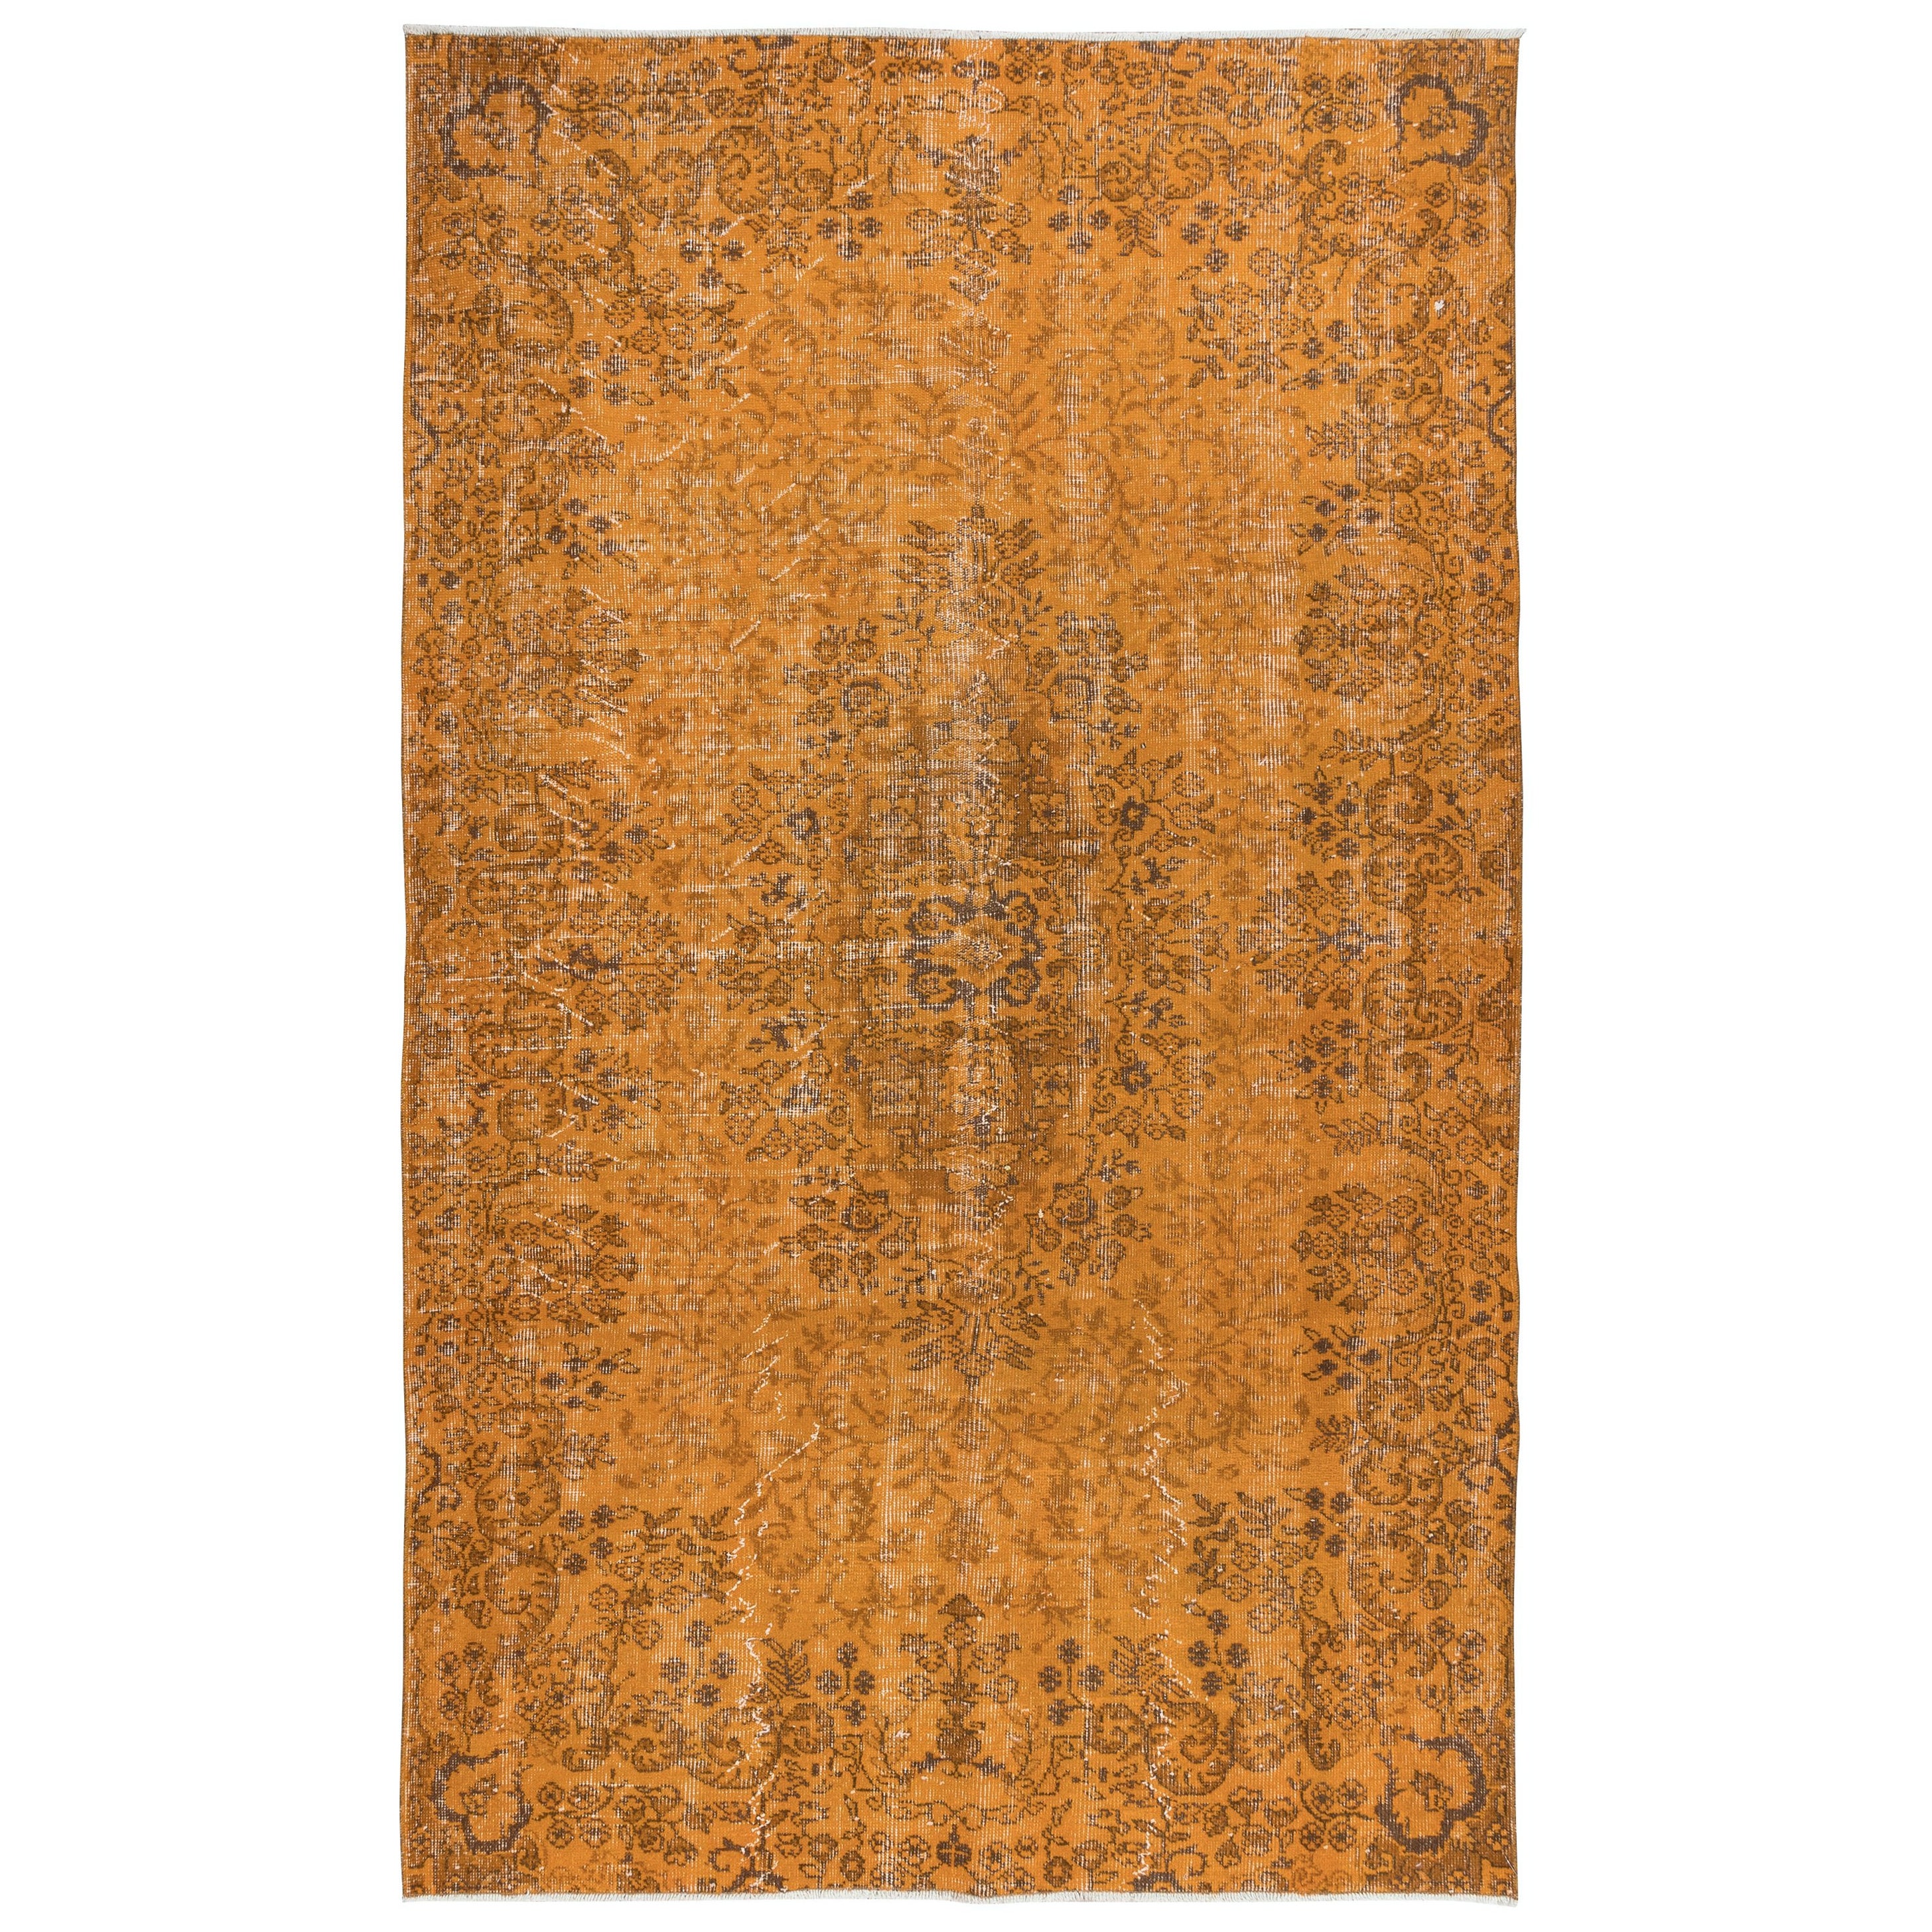 5.7x9.2 Ft Rustic Turkish Area Rug, Orange Handmade Contemporary Wool Carpet For Sale